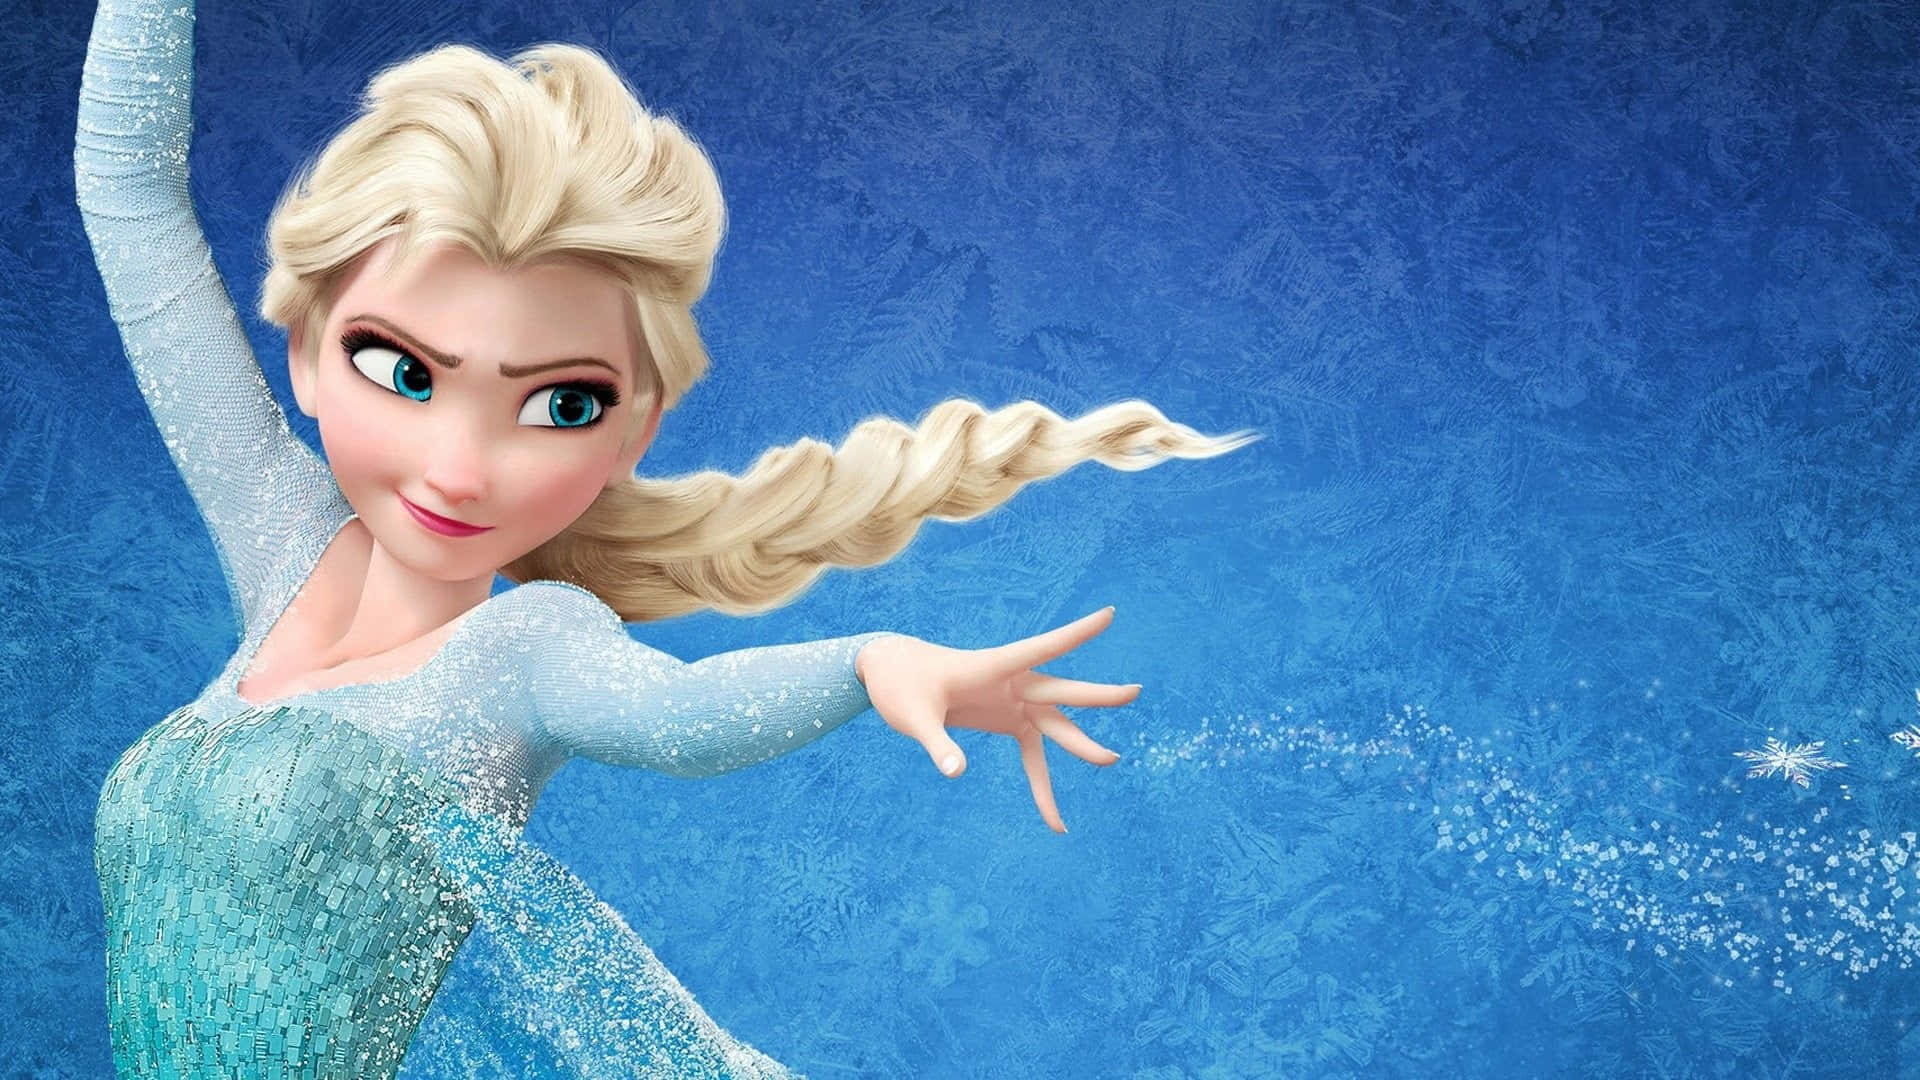 Arendelle Awaits In Disney's Frozen